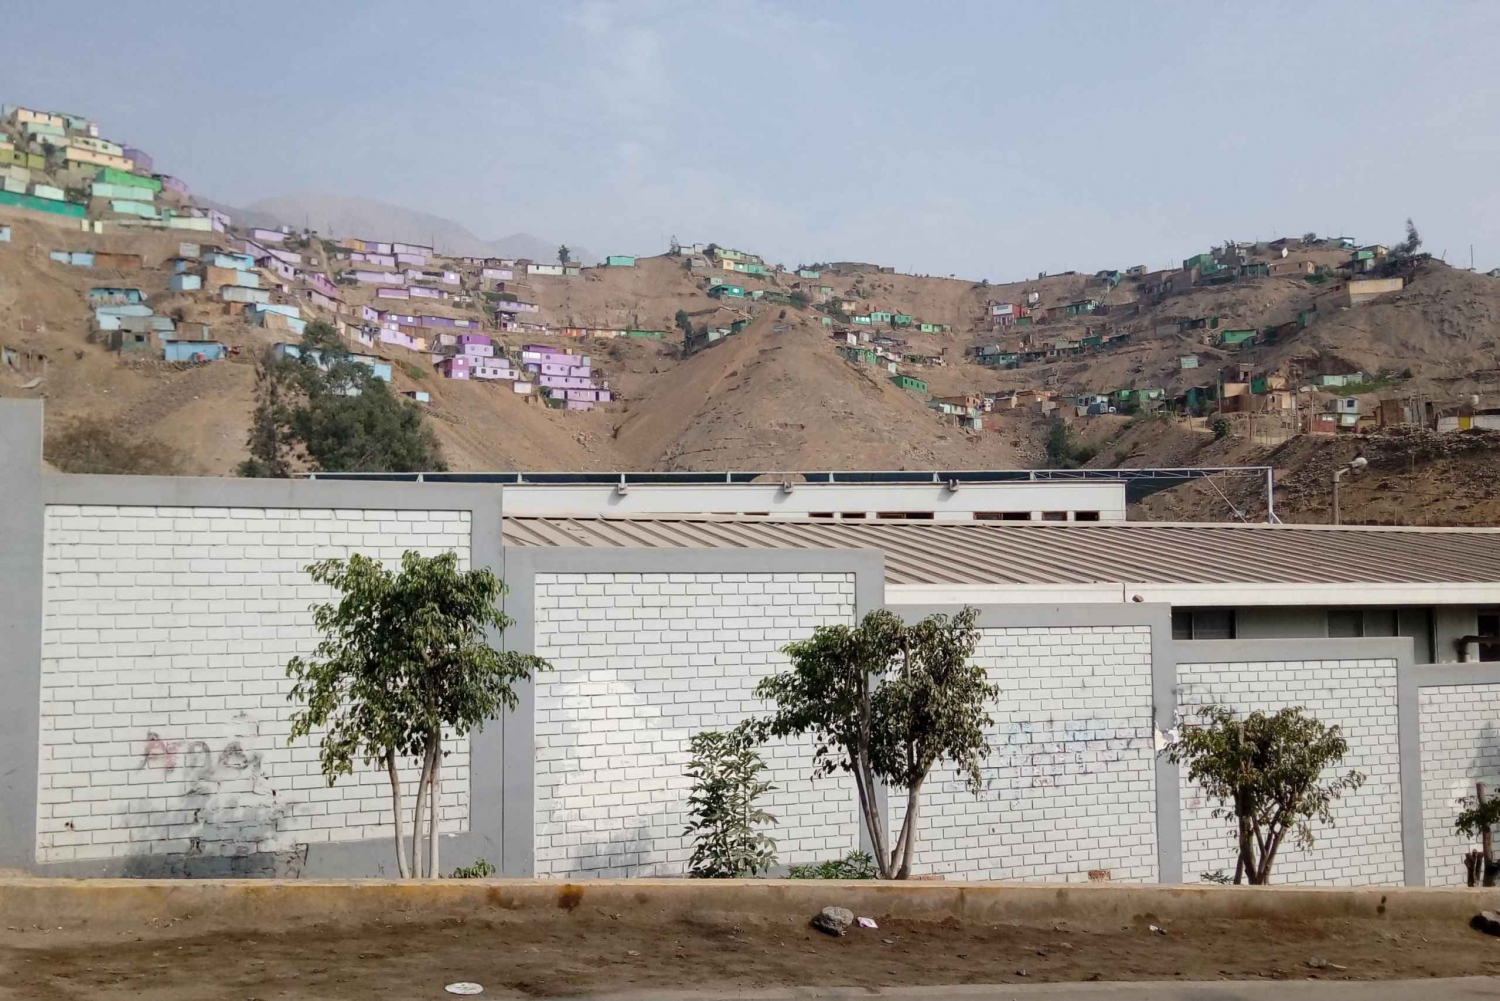 Lima: Shanty Town Exploration